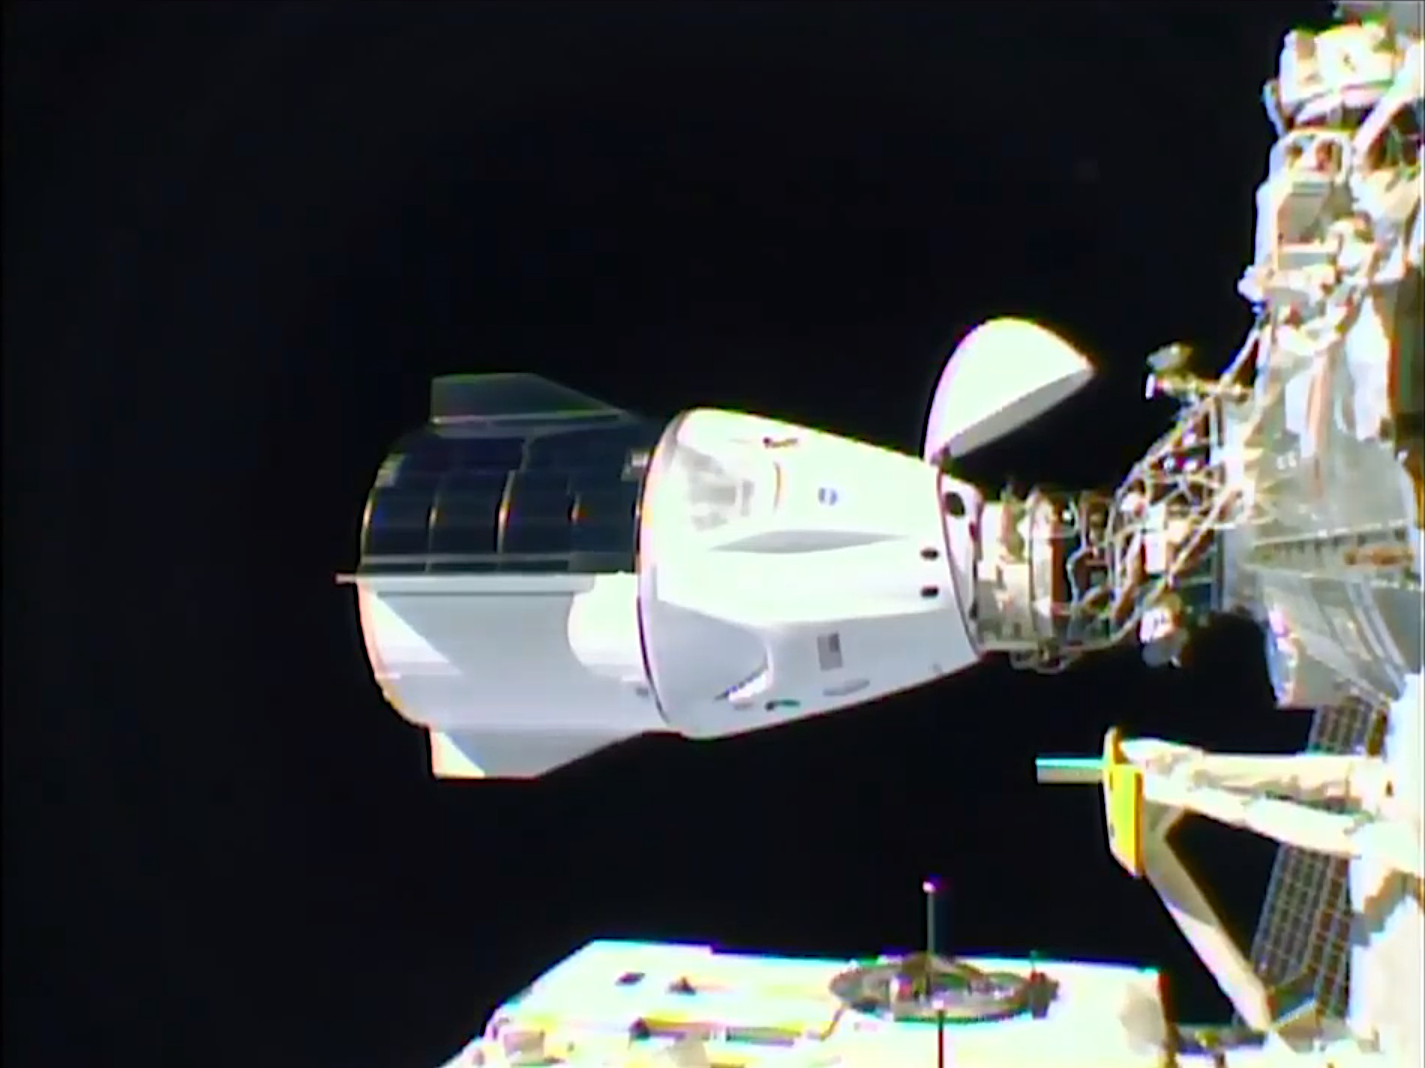 crew dragon resilience crew-1 docking international space station spacex nasa